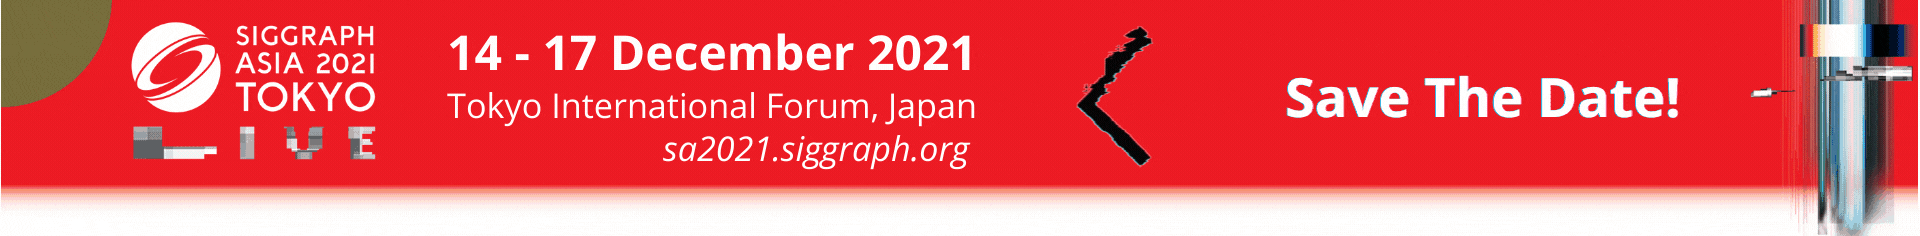 Siggraph Asia 2021东京